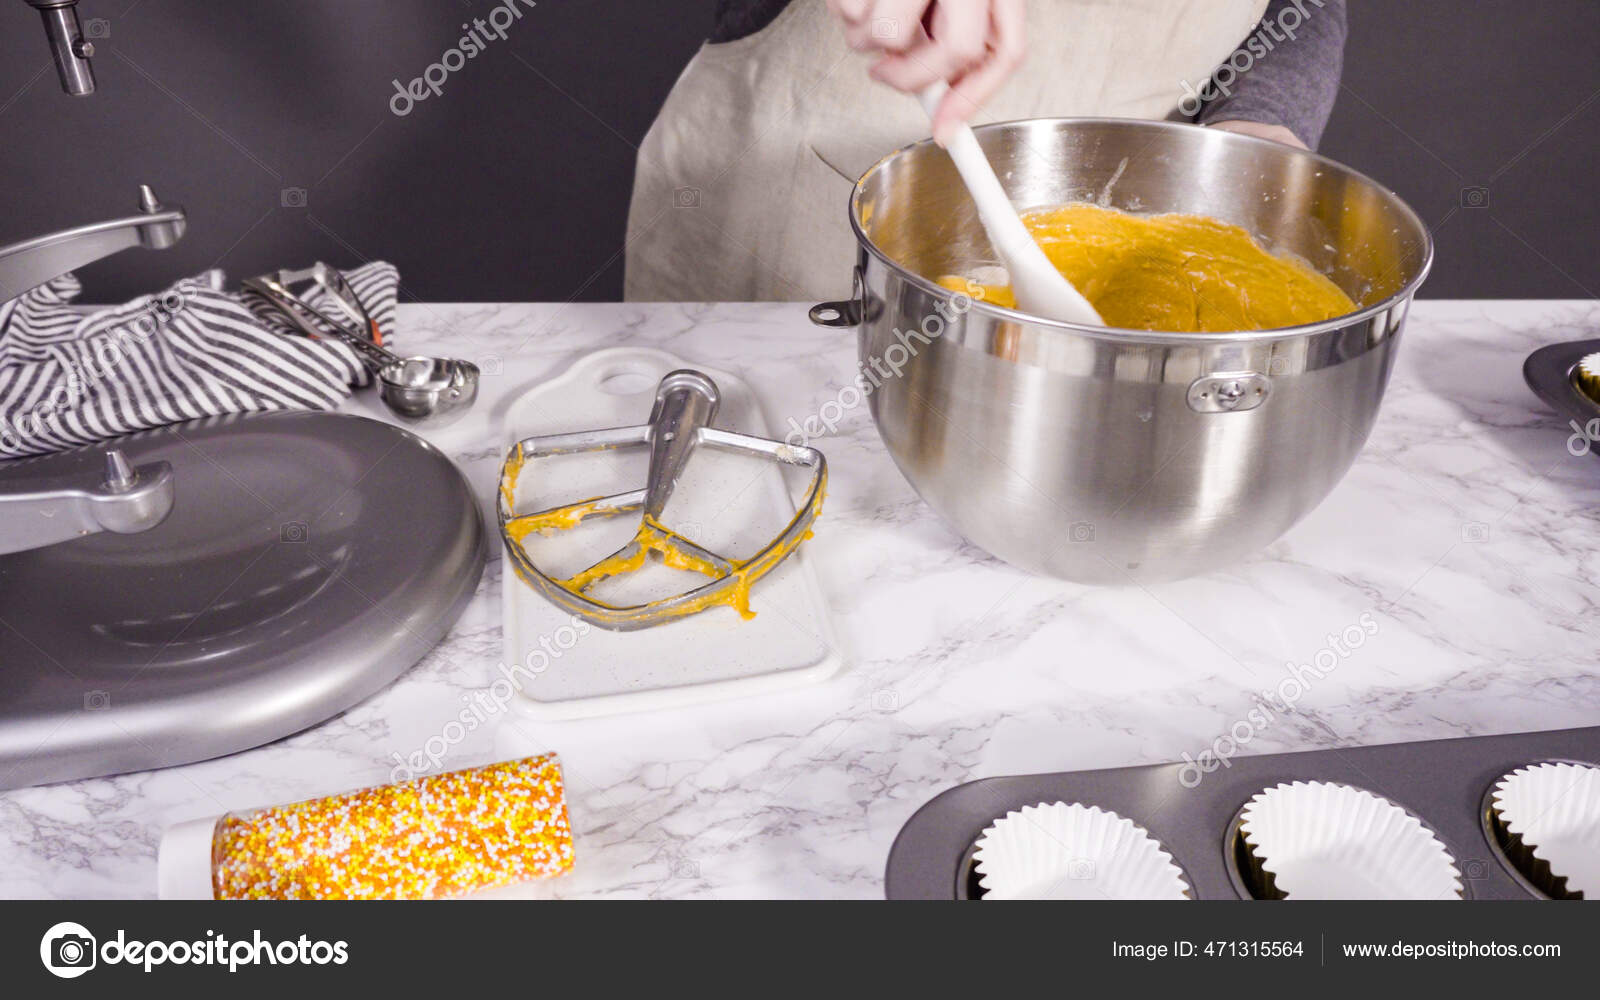 https://st2.depositphotos.com/1118354/47131/i/1600/depositphotos_471315564-stock-photo-scooping-pumpkin-spice-cupcake-batter.jpg